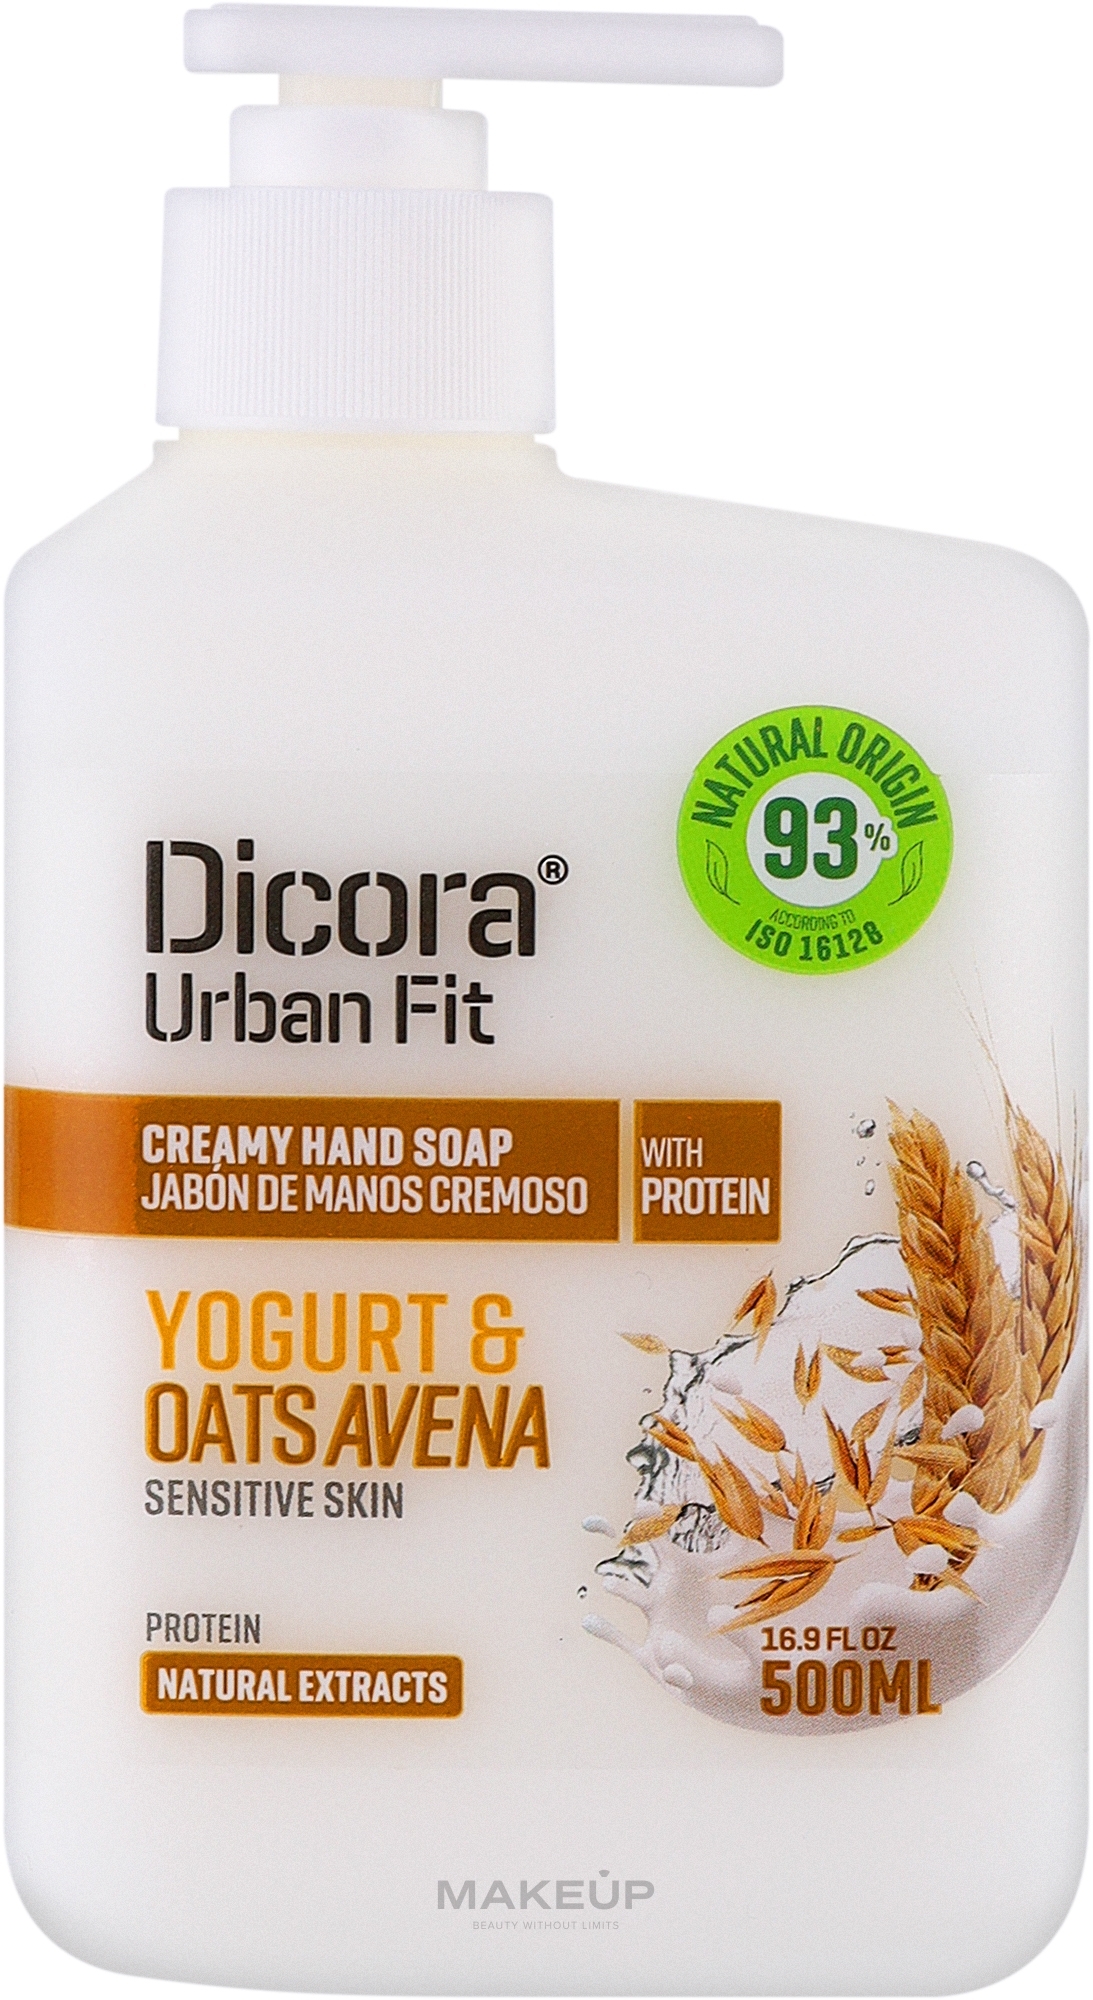 Liquid Hand Cream Soap "Yoghurt & Oat" - Dicora Urban Fit Creamy Hand Soap Yogurt & Oats Avena — photo 500 ml